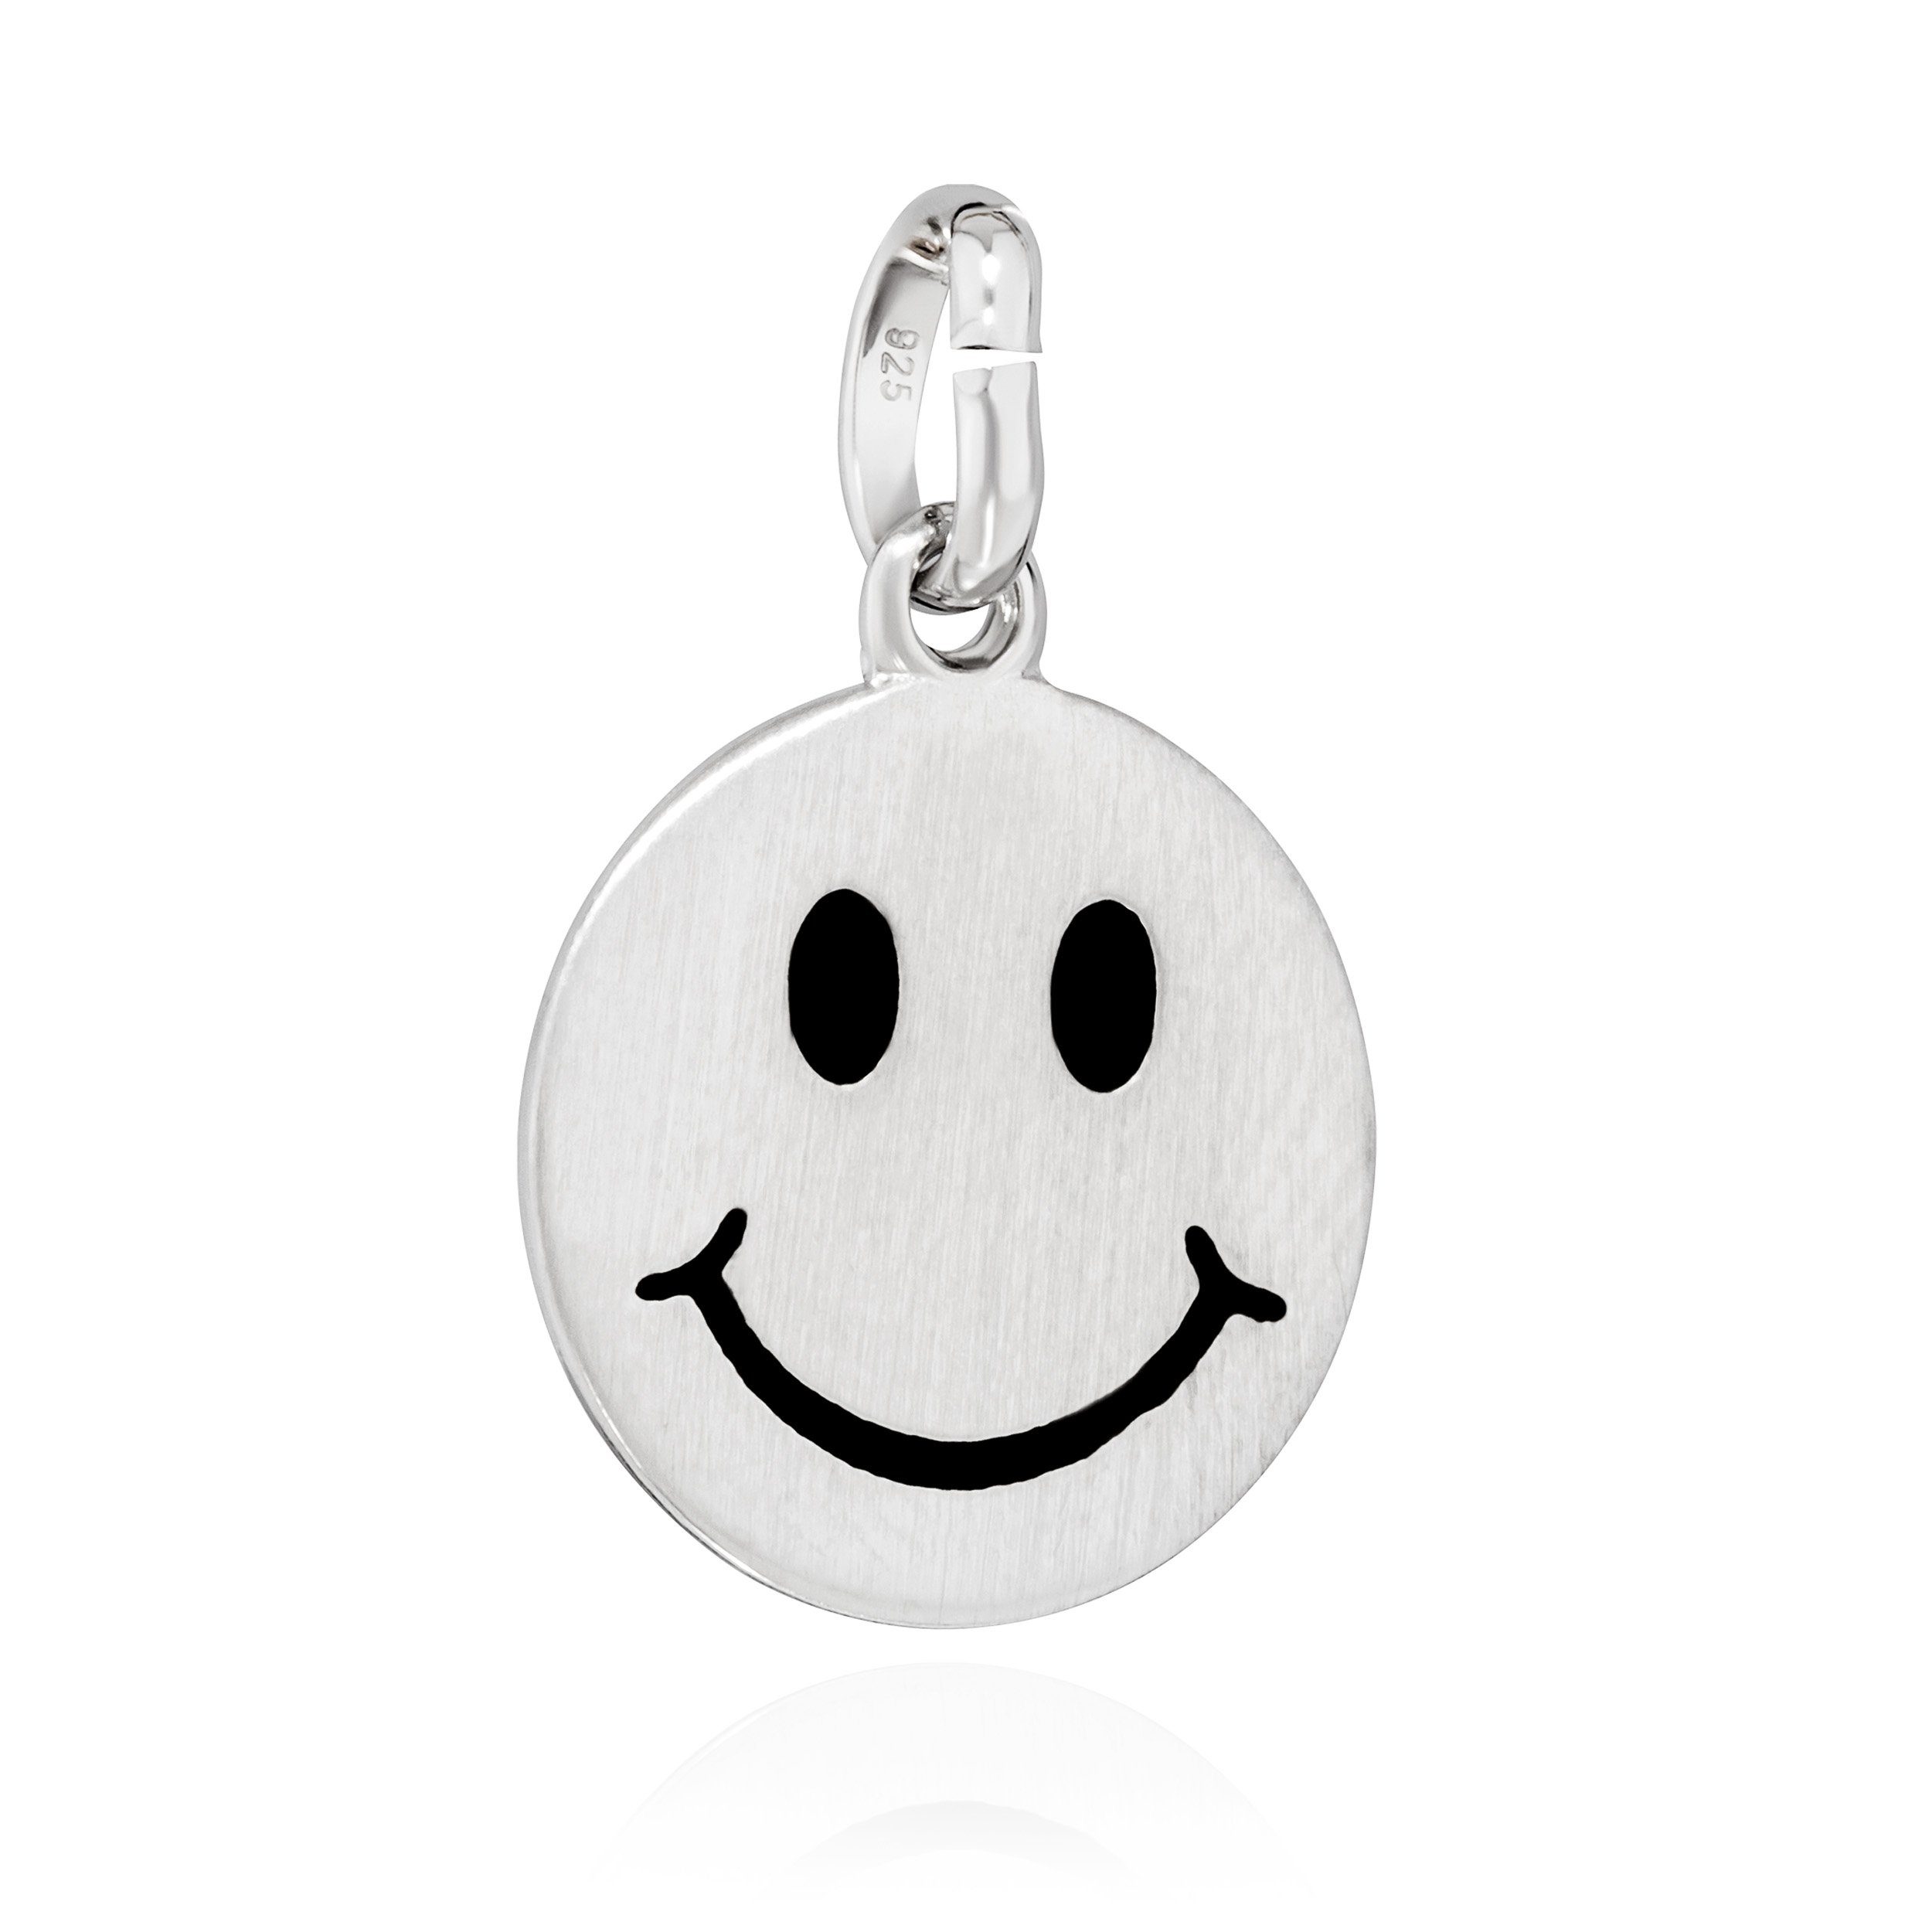 NKlaus Kettenanhänger Kettenahänger Smiley 925 Silber matt schwarz lackiert  12mm Amulett Tal | Kettenanhänger